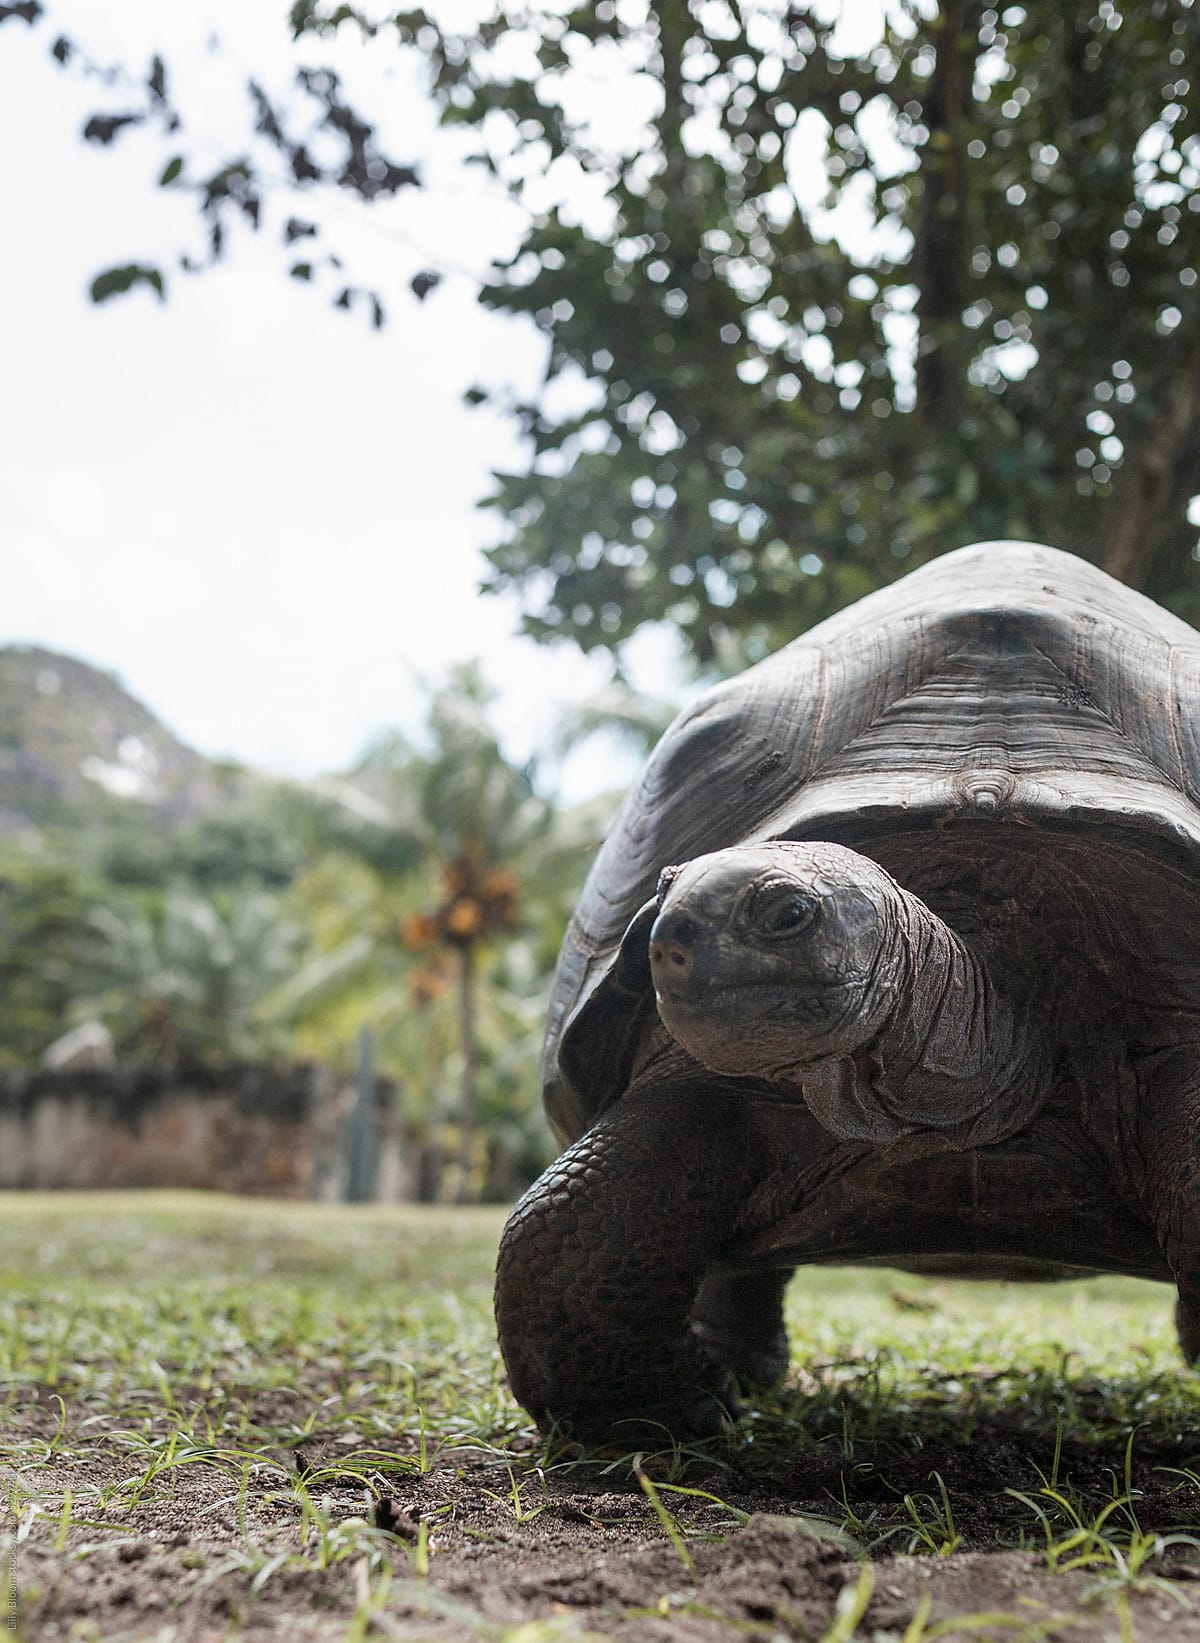 Eychelles giant tortoise